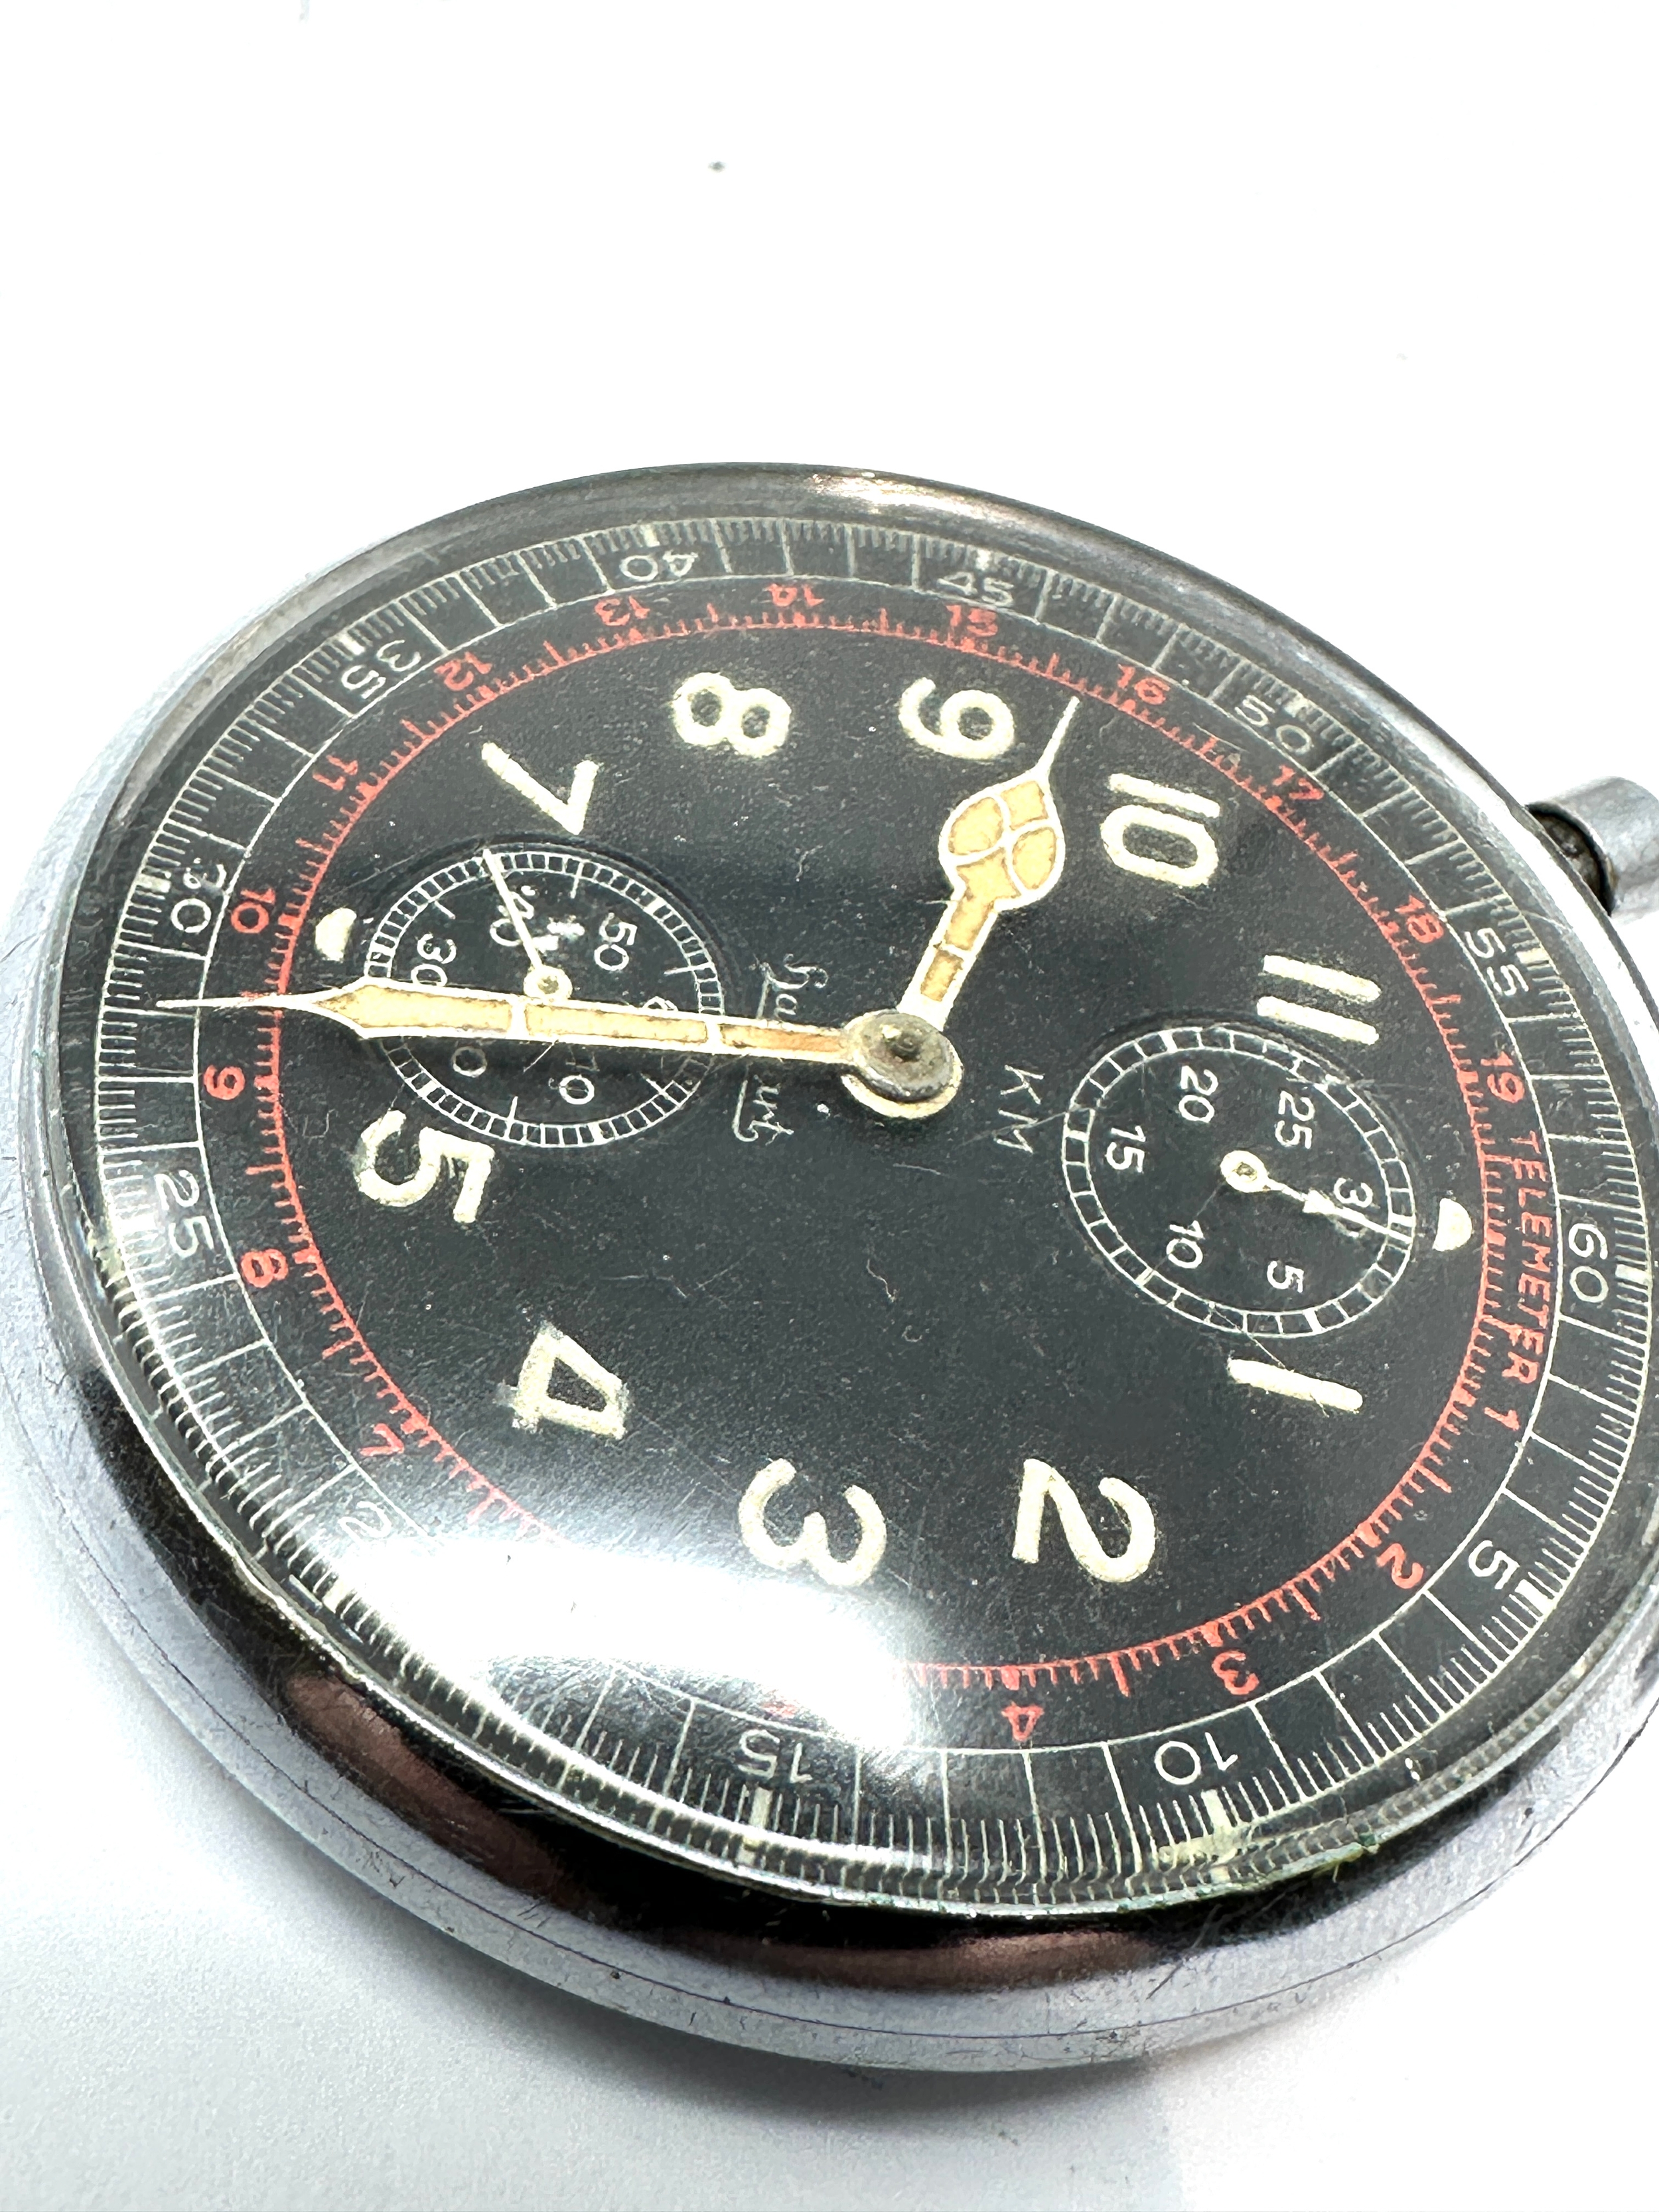 German Hanhart Kriegsmarine KM Chronograph Pocket Watch U-boat Navy the watch is ticking - Image 3 of 4